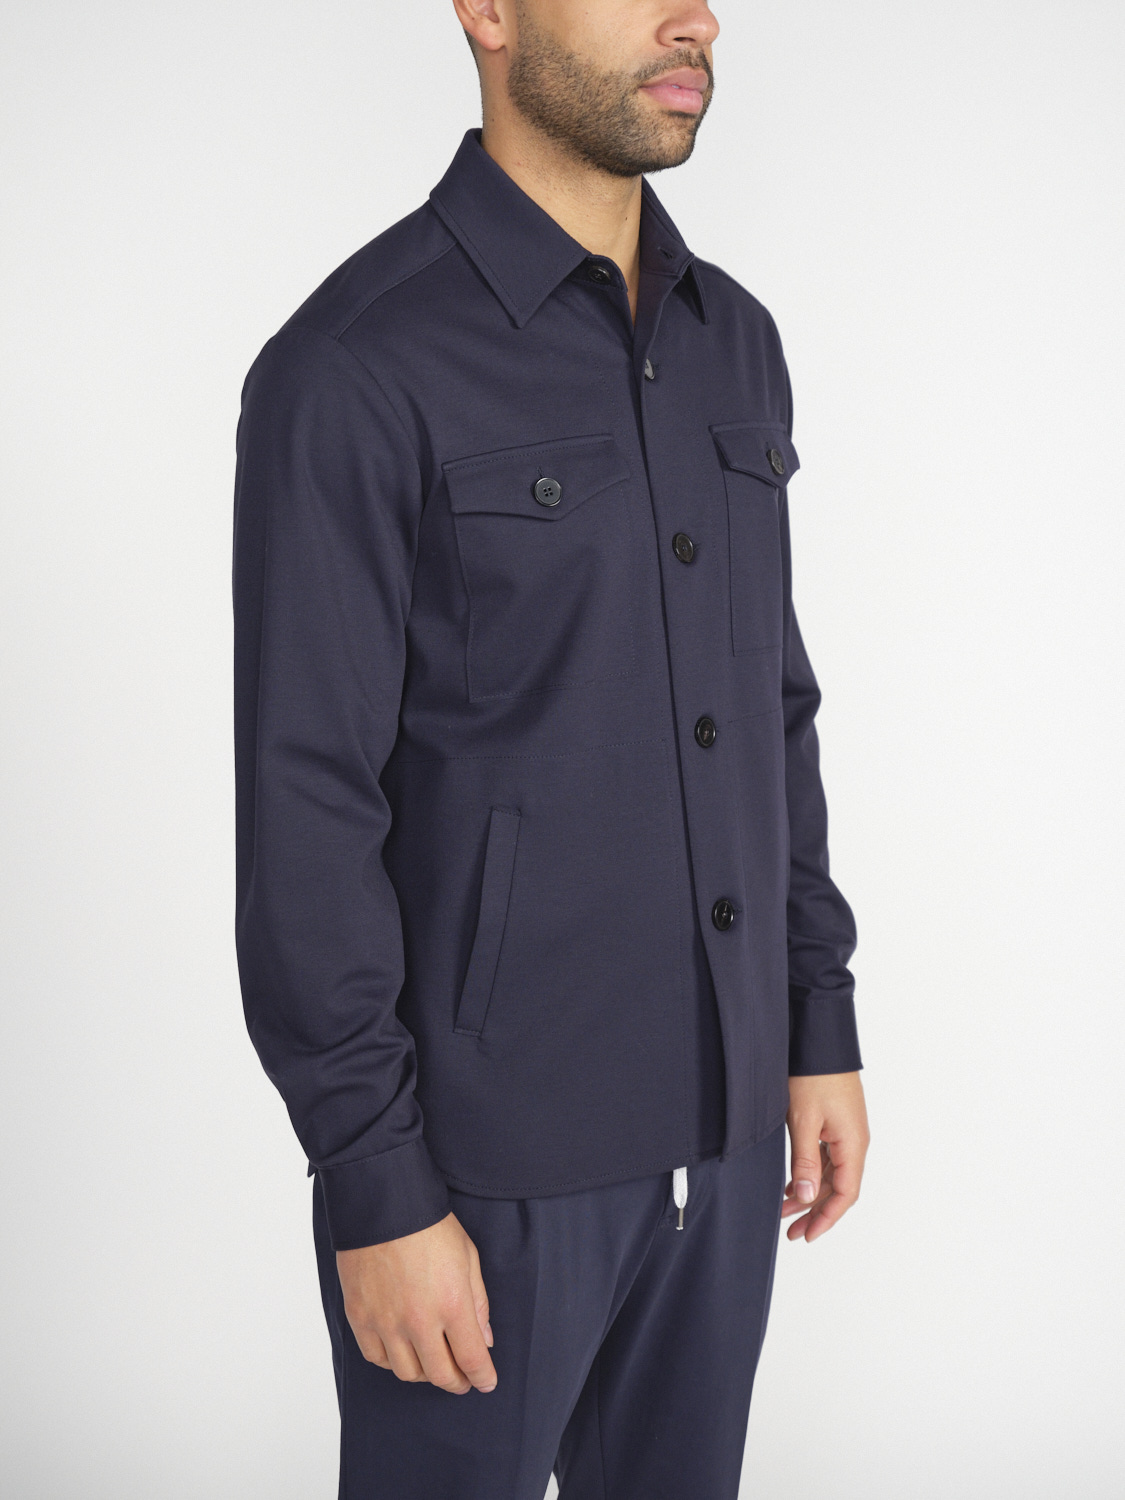 Harris Wharf London Techno viscose - Stretchy shirt jacket made from tech fabric  marine 48